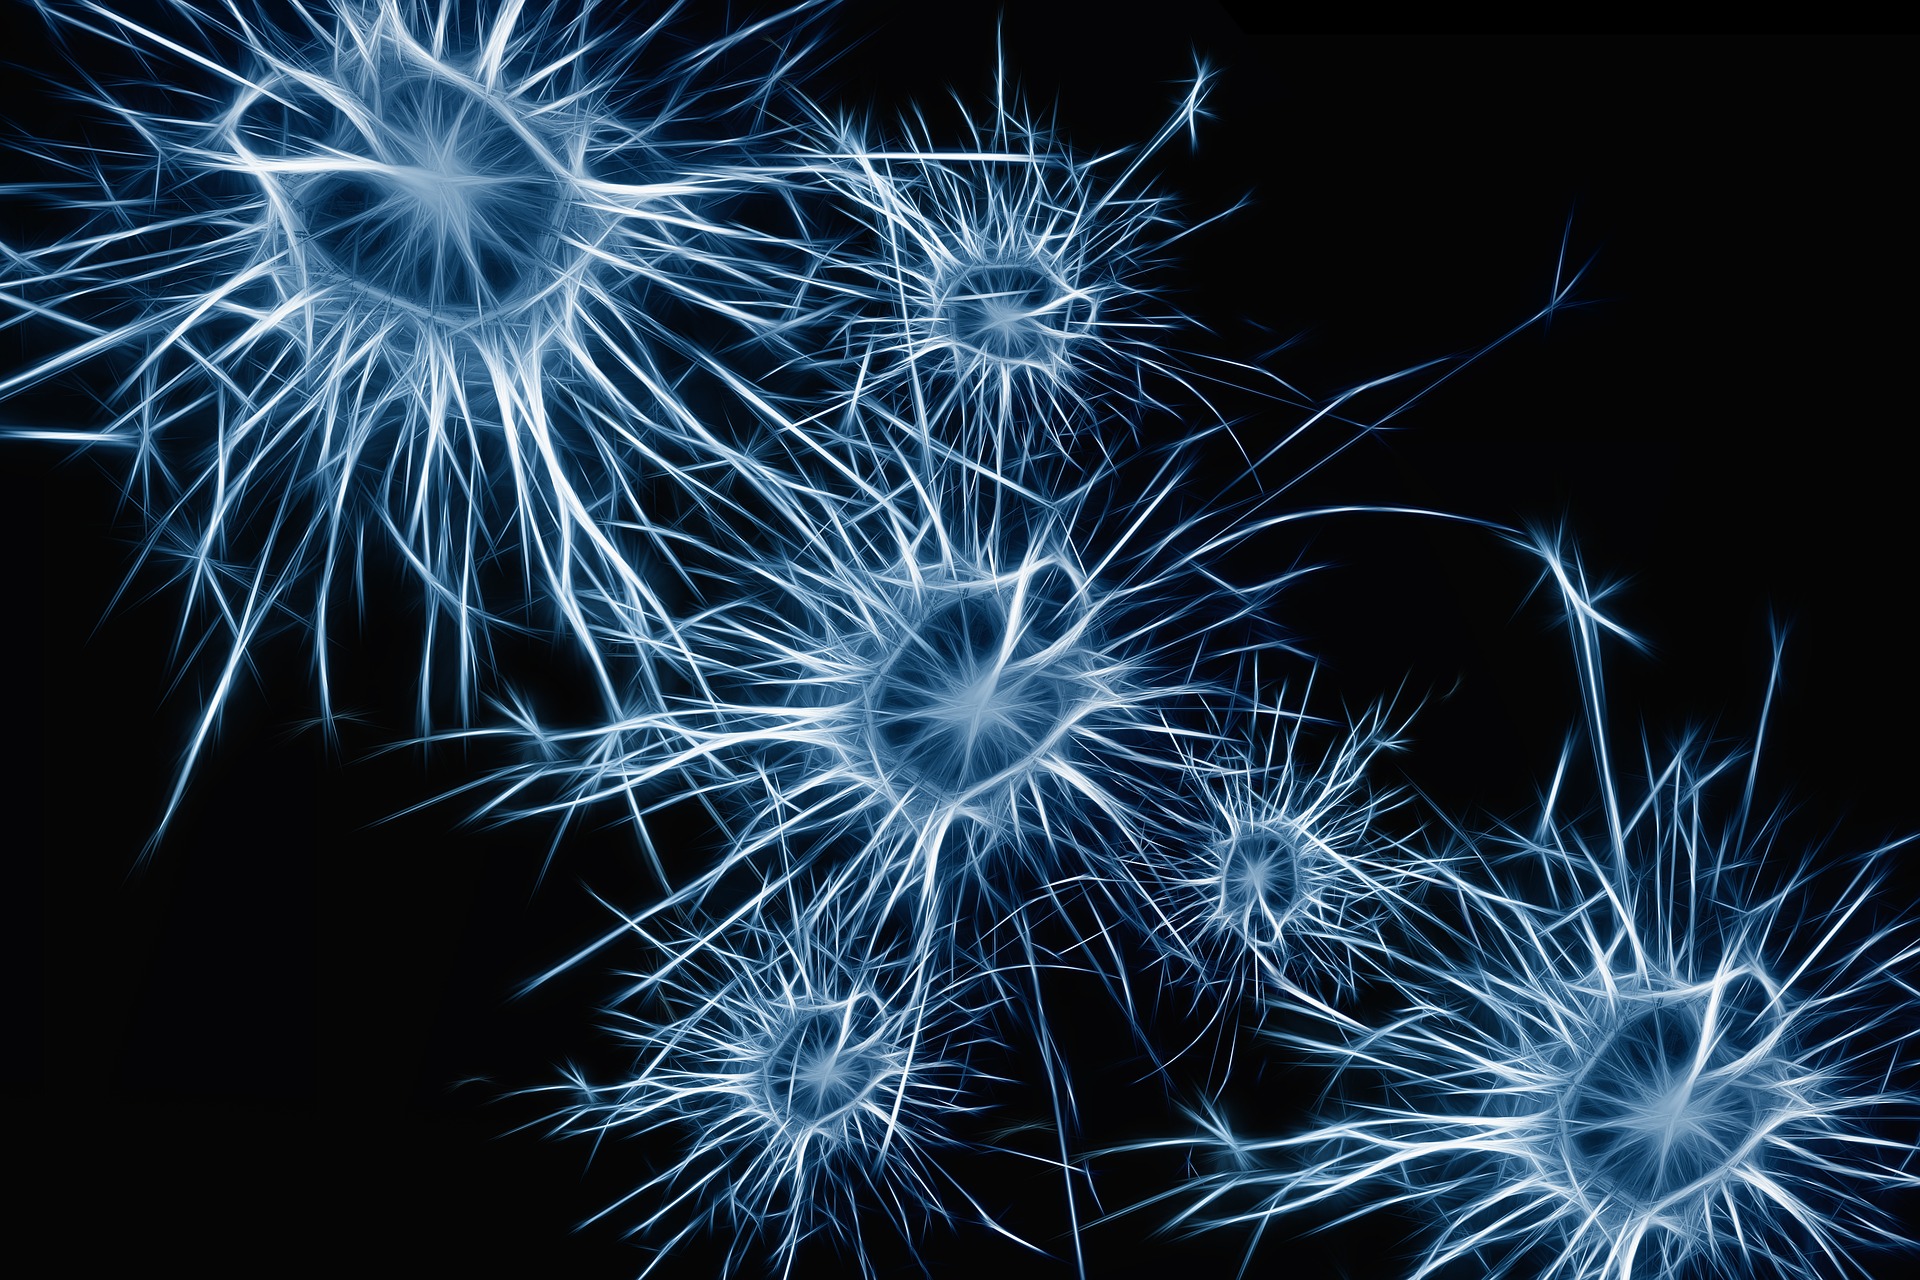 neurons-1773922_1920.jpg